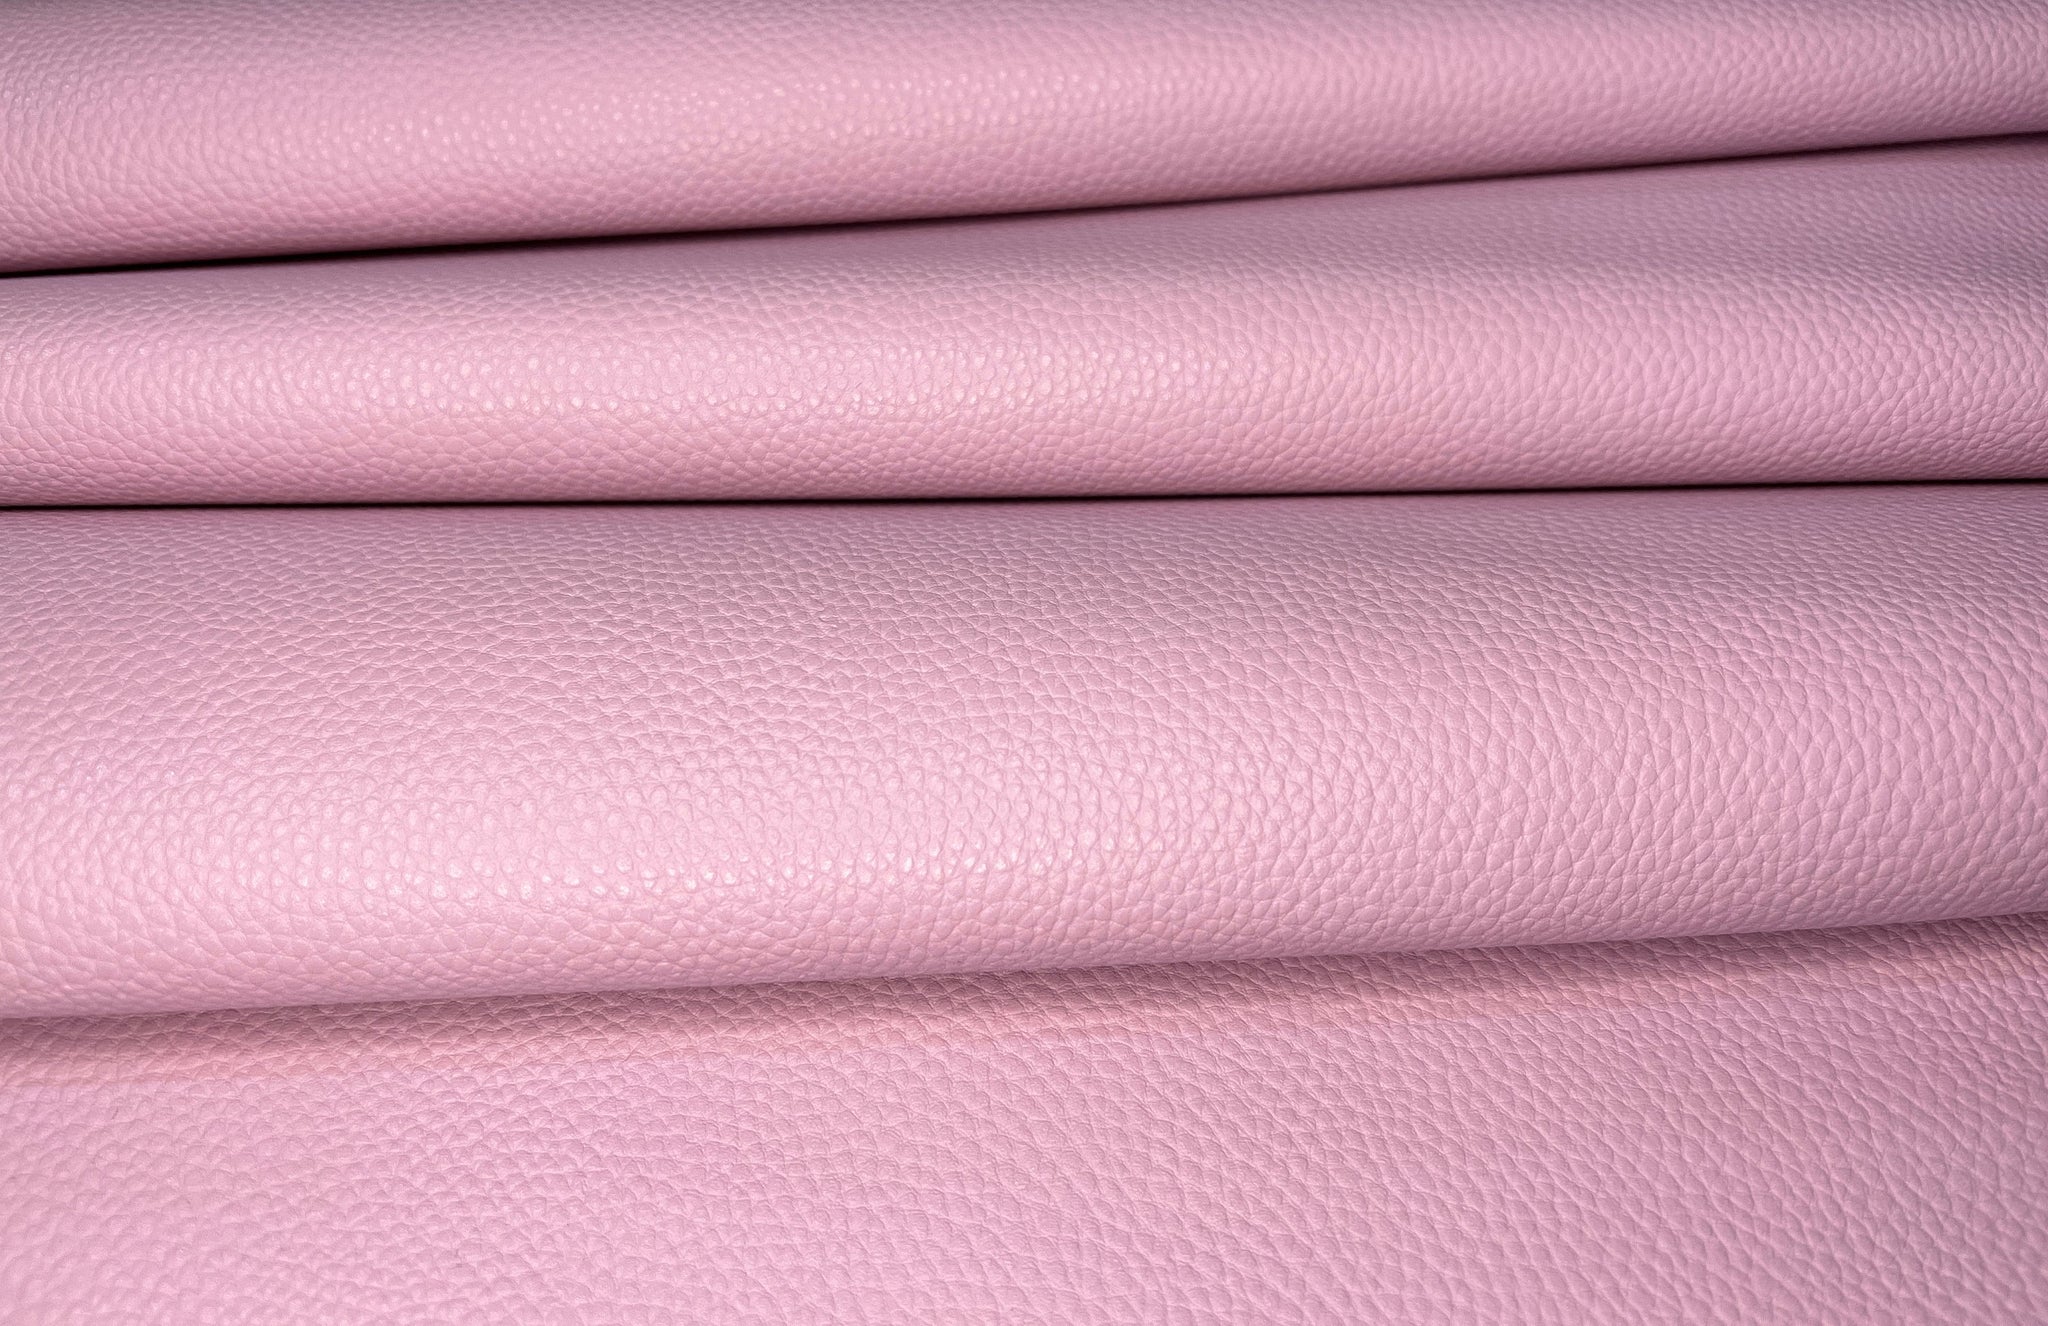 Lightweight Faux Leather - Mauve Pink Textured Vinyl